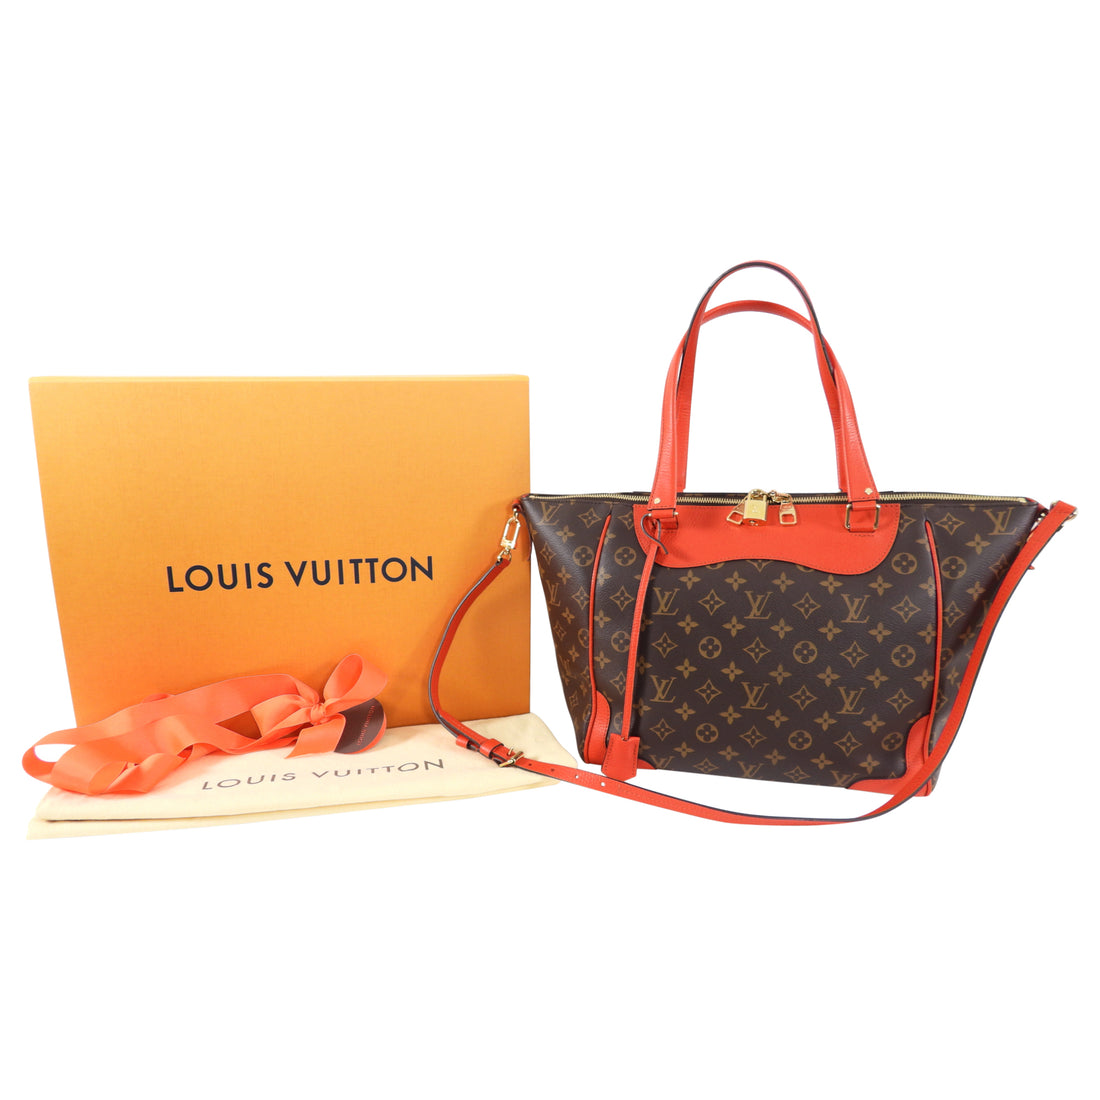 My Comparison of My Louis Vuitton Retiro PM Versus My Estrela MM